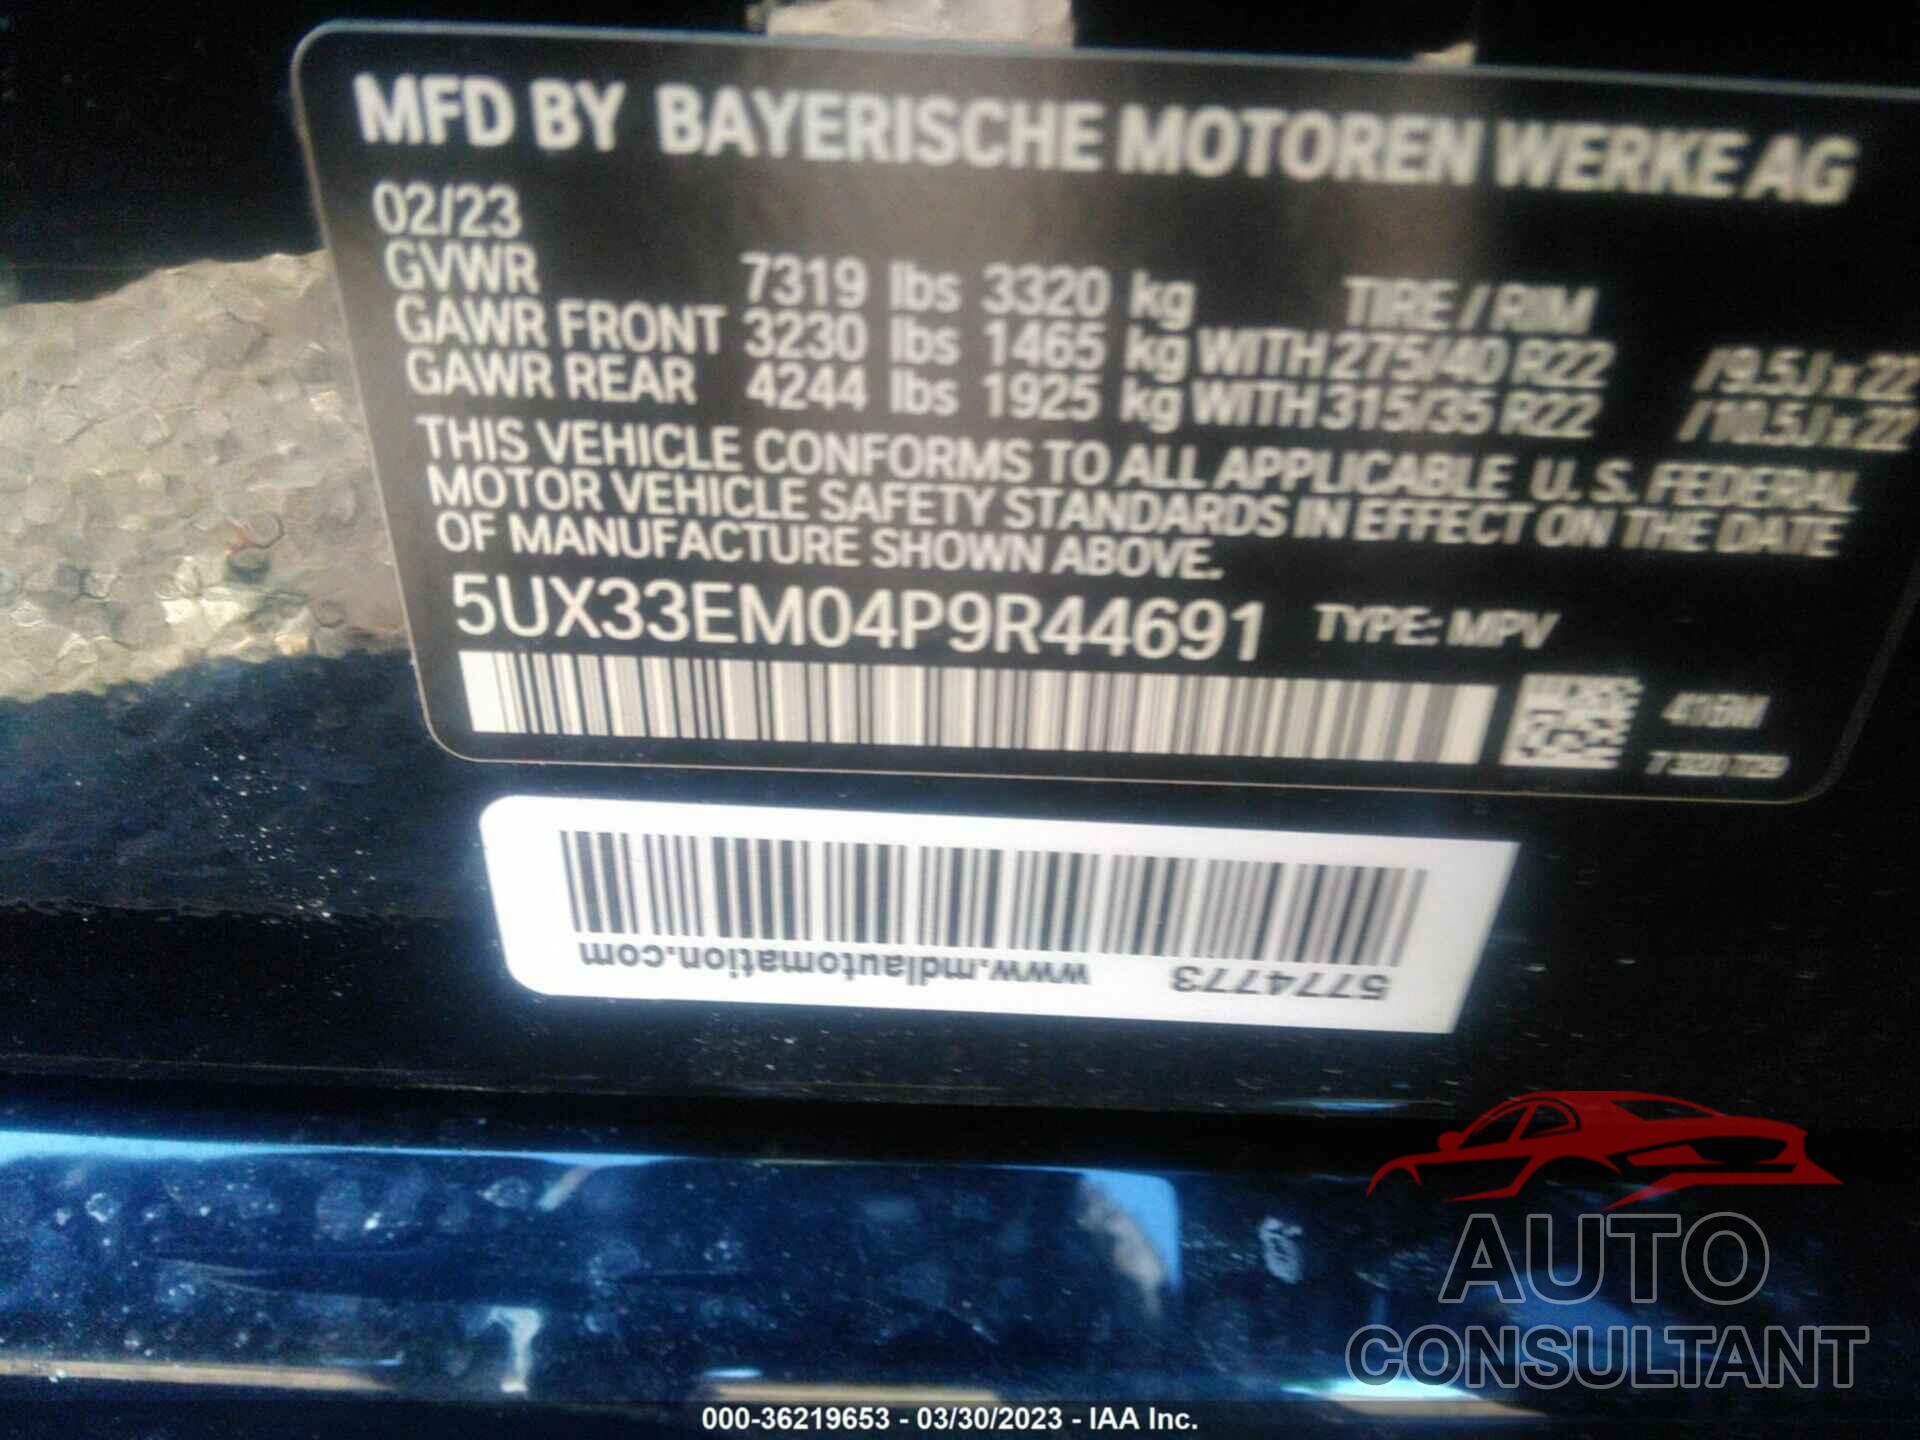 BMW X7 2023 - 5UX33EM04P9R44691